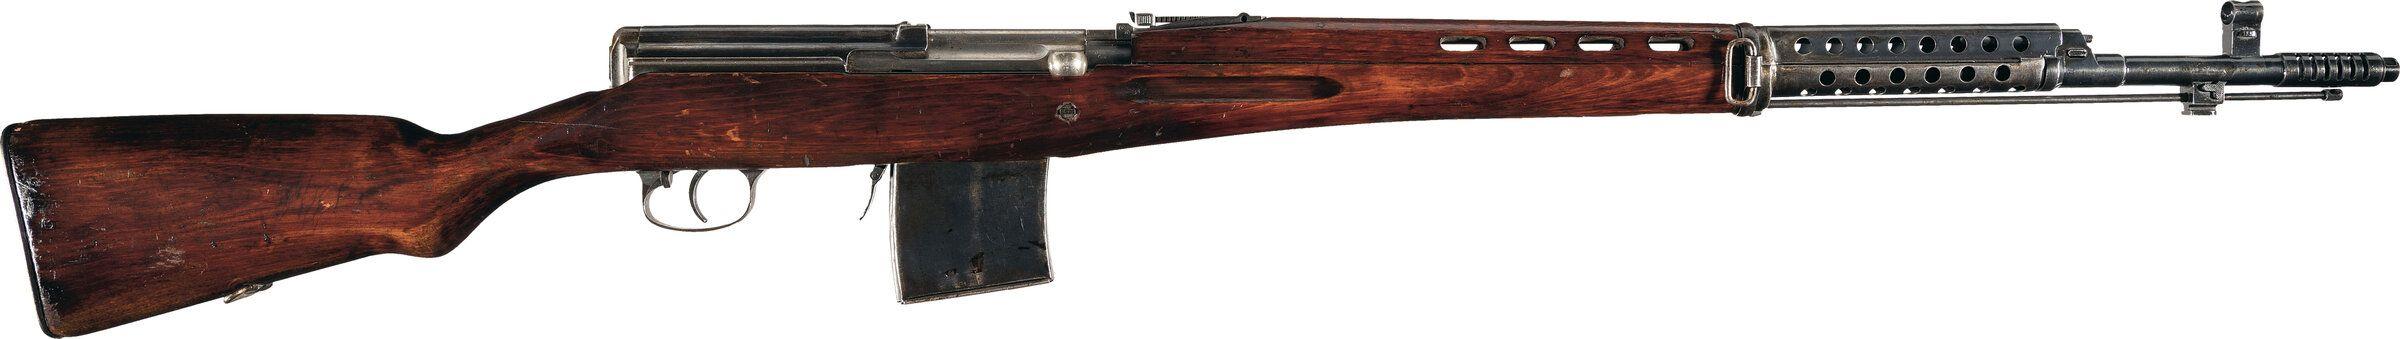 World War II Soviet Podolsk Tokarev SVT-40 Semi-Automatic Rifle